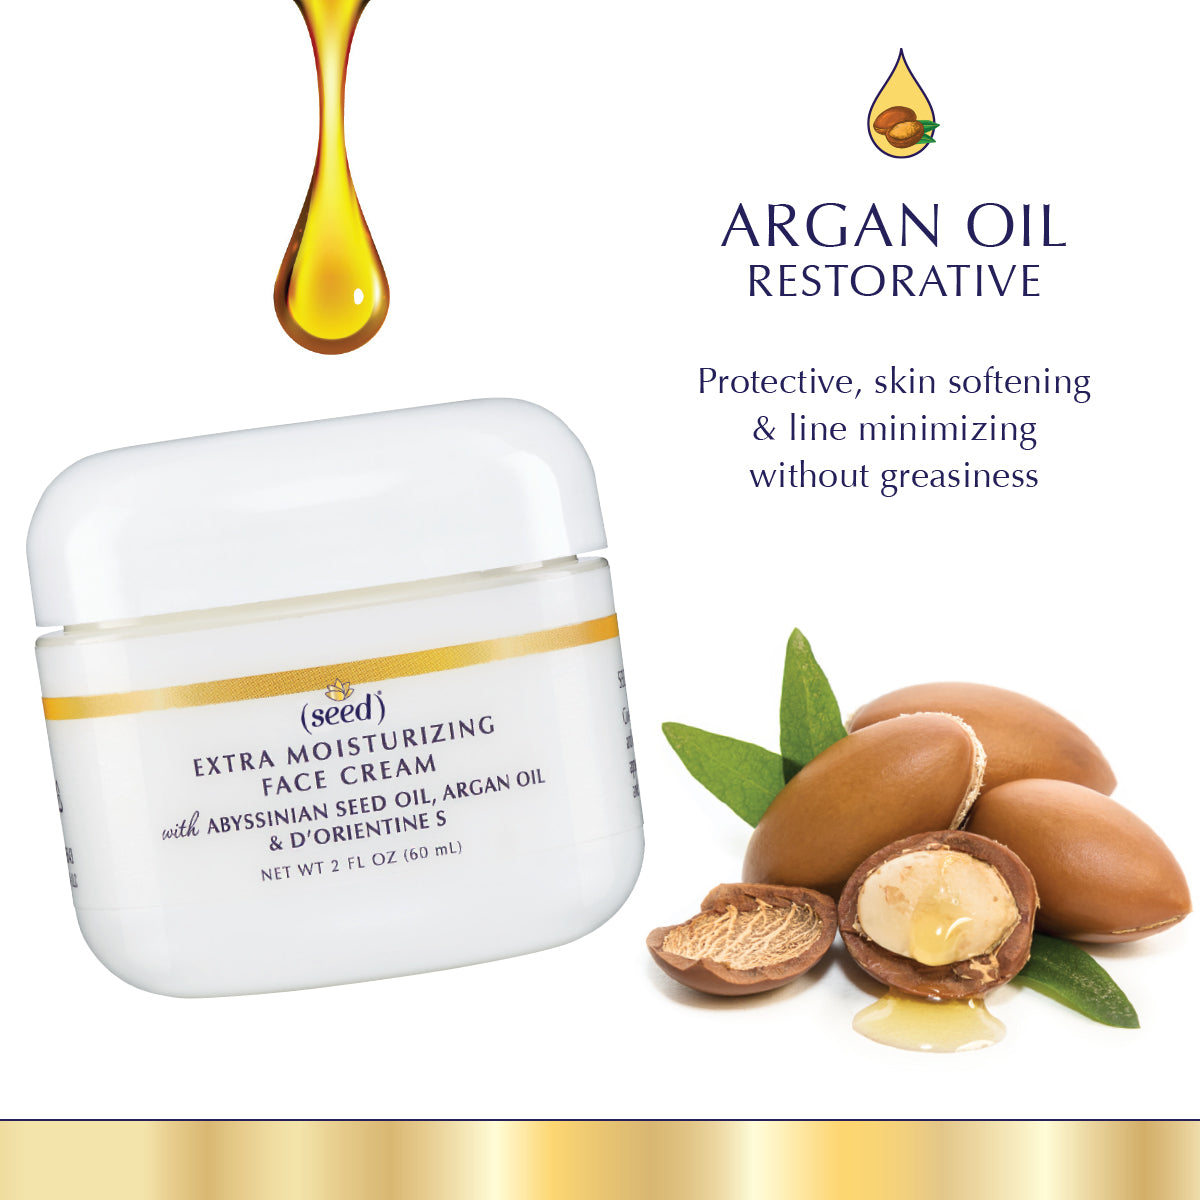 Seed Advanced Botanicals Extra Moisturizing Face Cream features Argan Oil